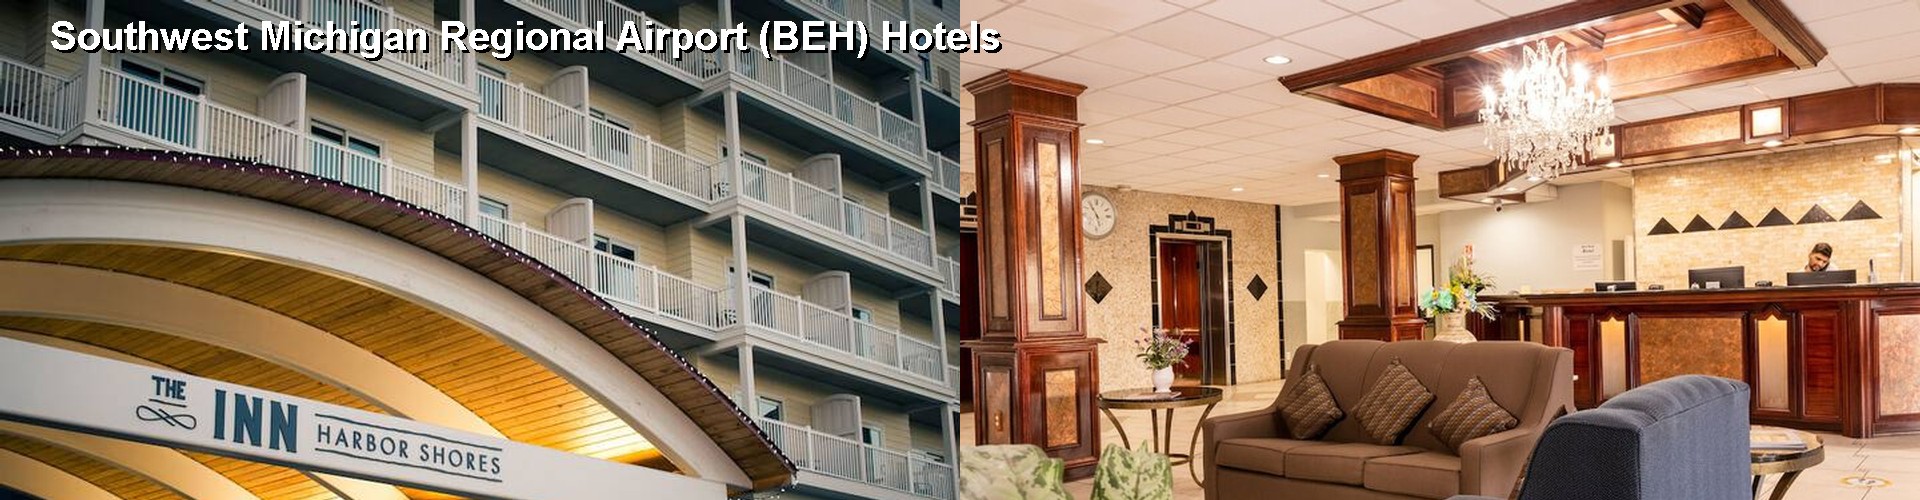 3 Best Hotels near Southwest Michigan Regional Airport (BEH)